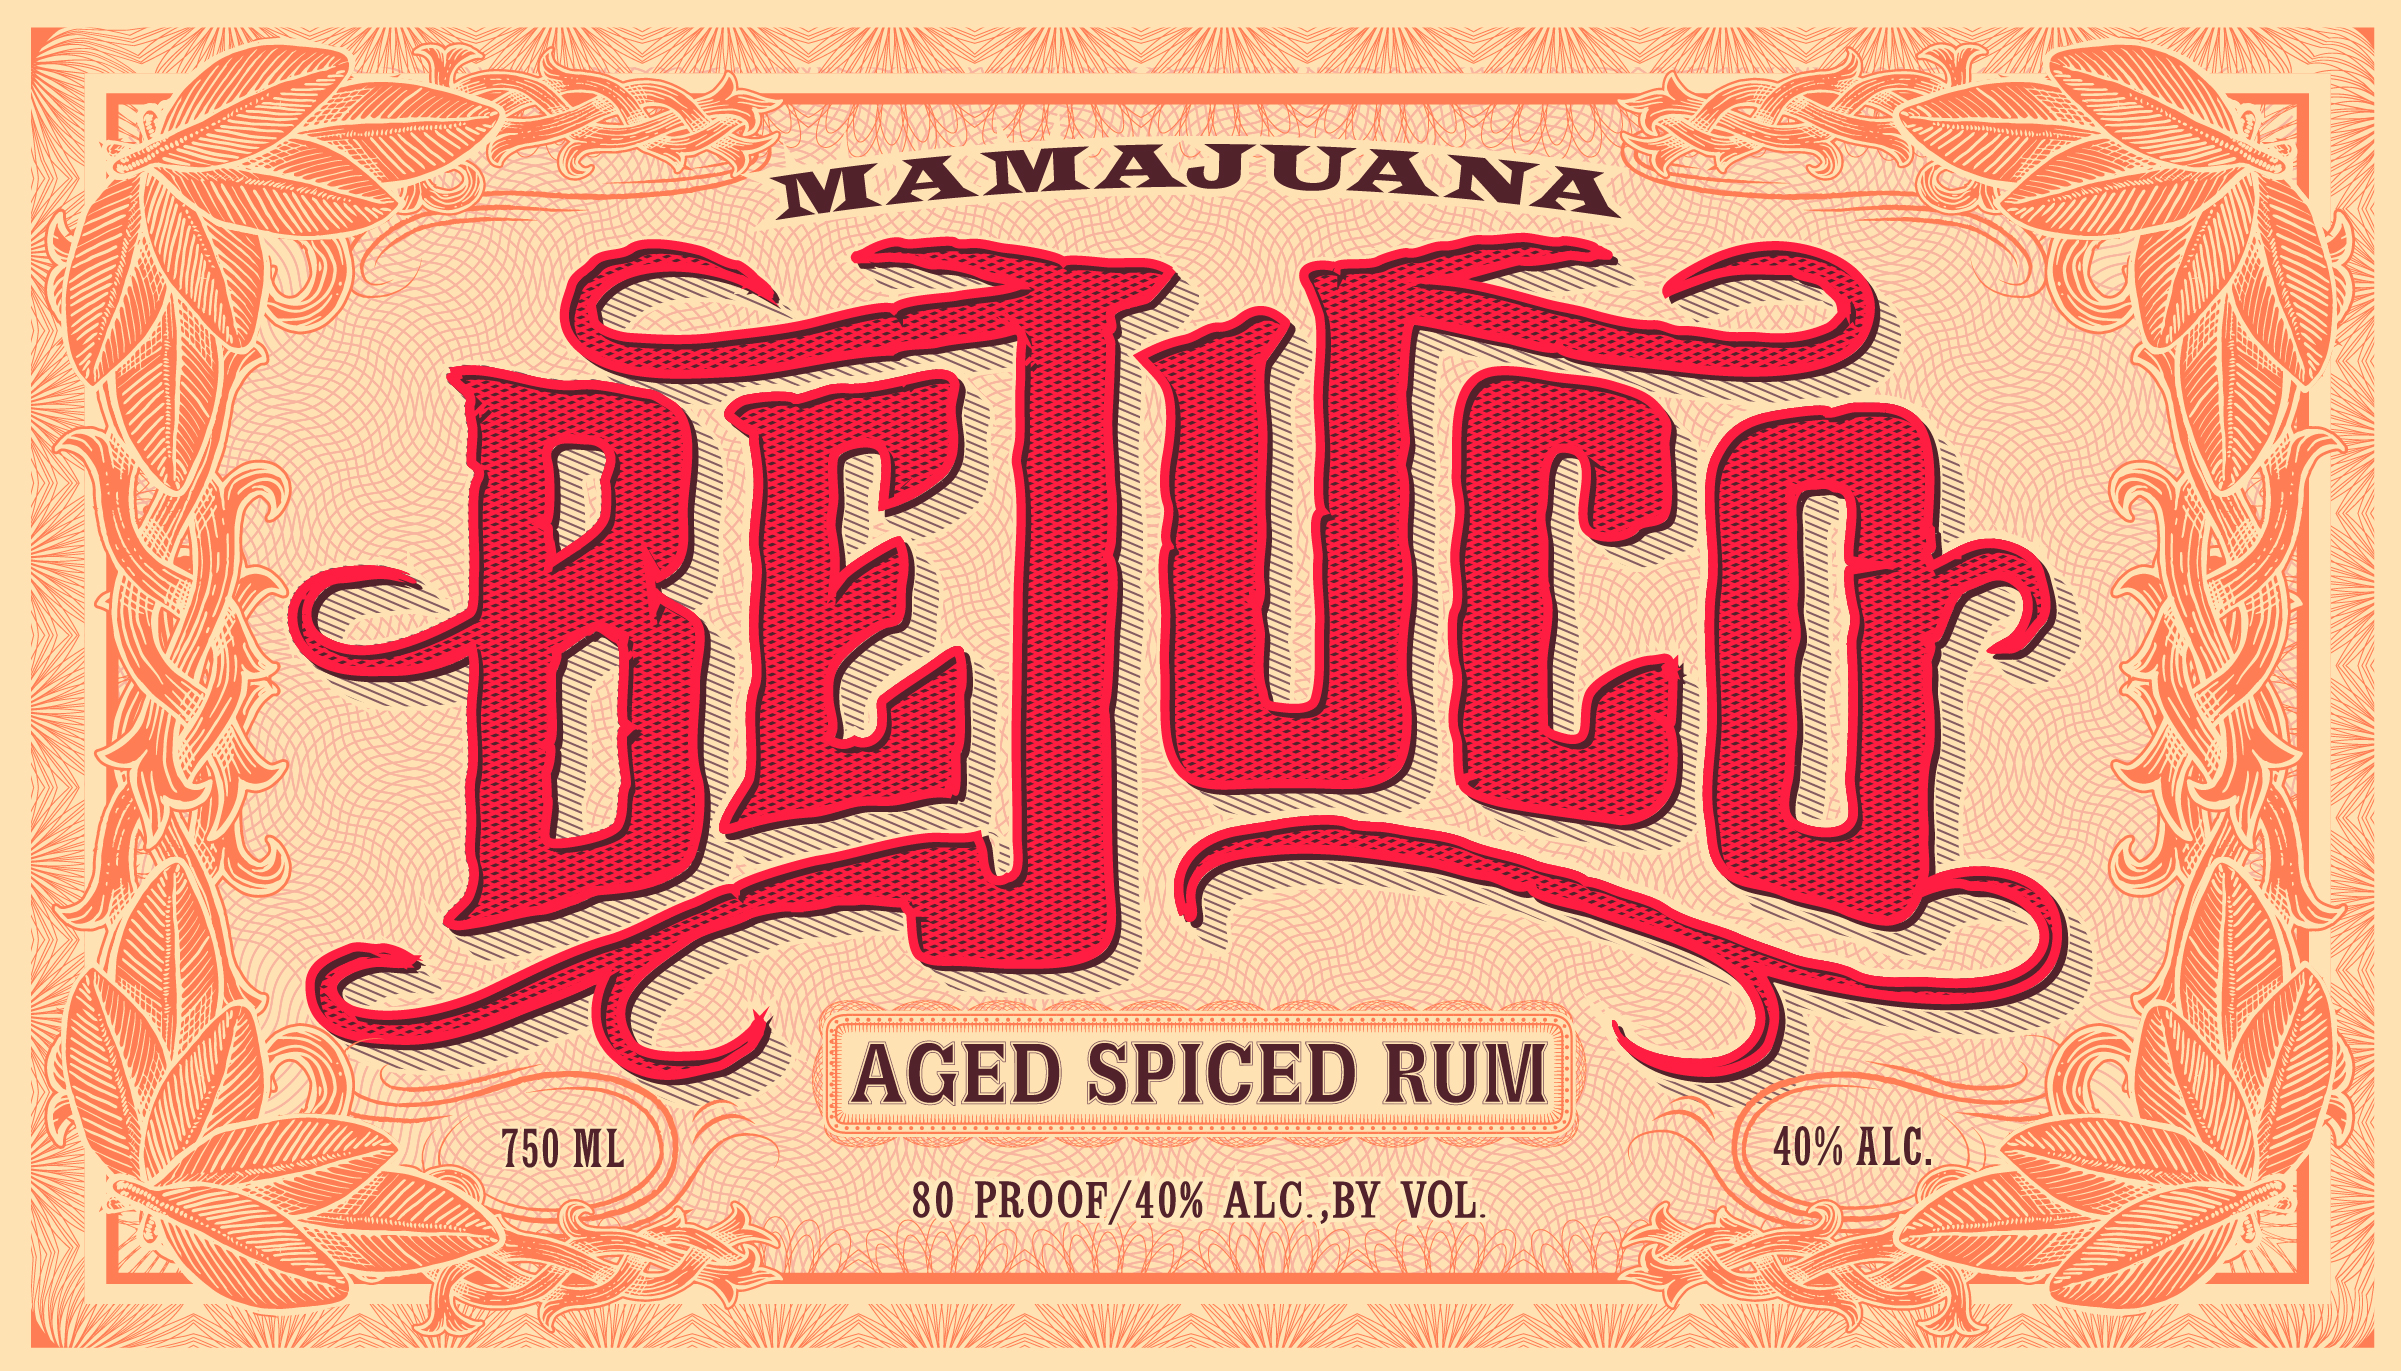 Bejuco Rum Label FRONT 9 print prep-01.jpg